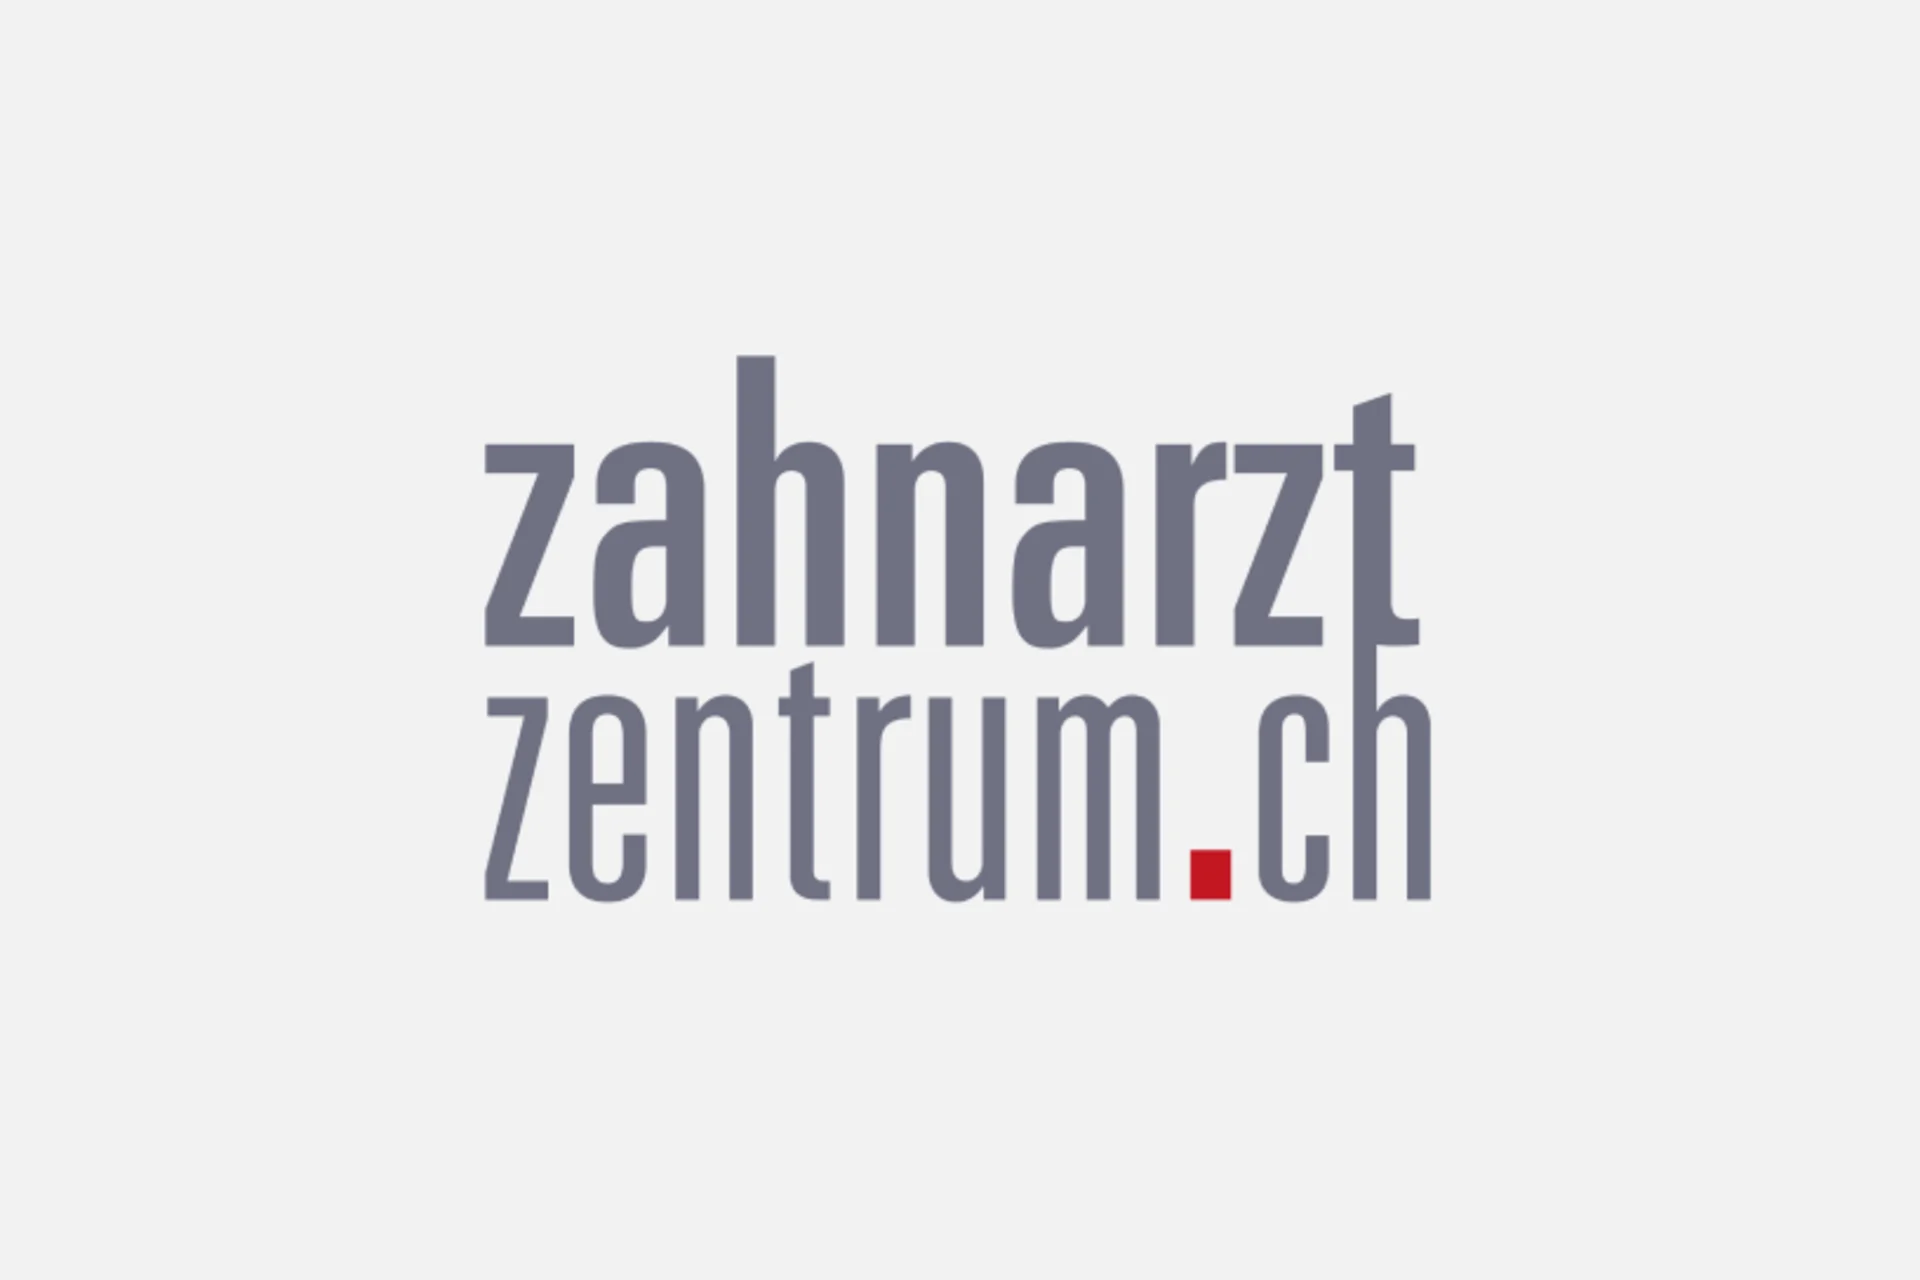 Logo del Zahnarztzentrum.ch